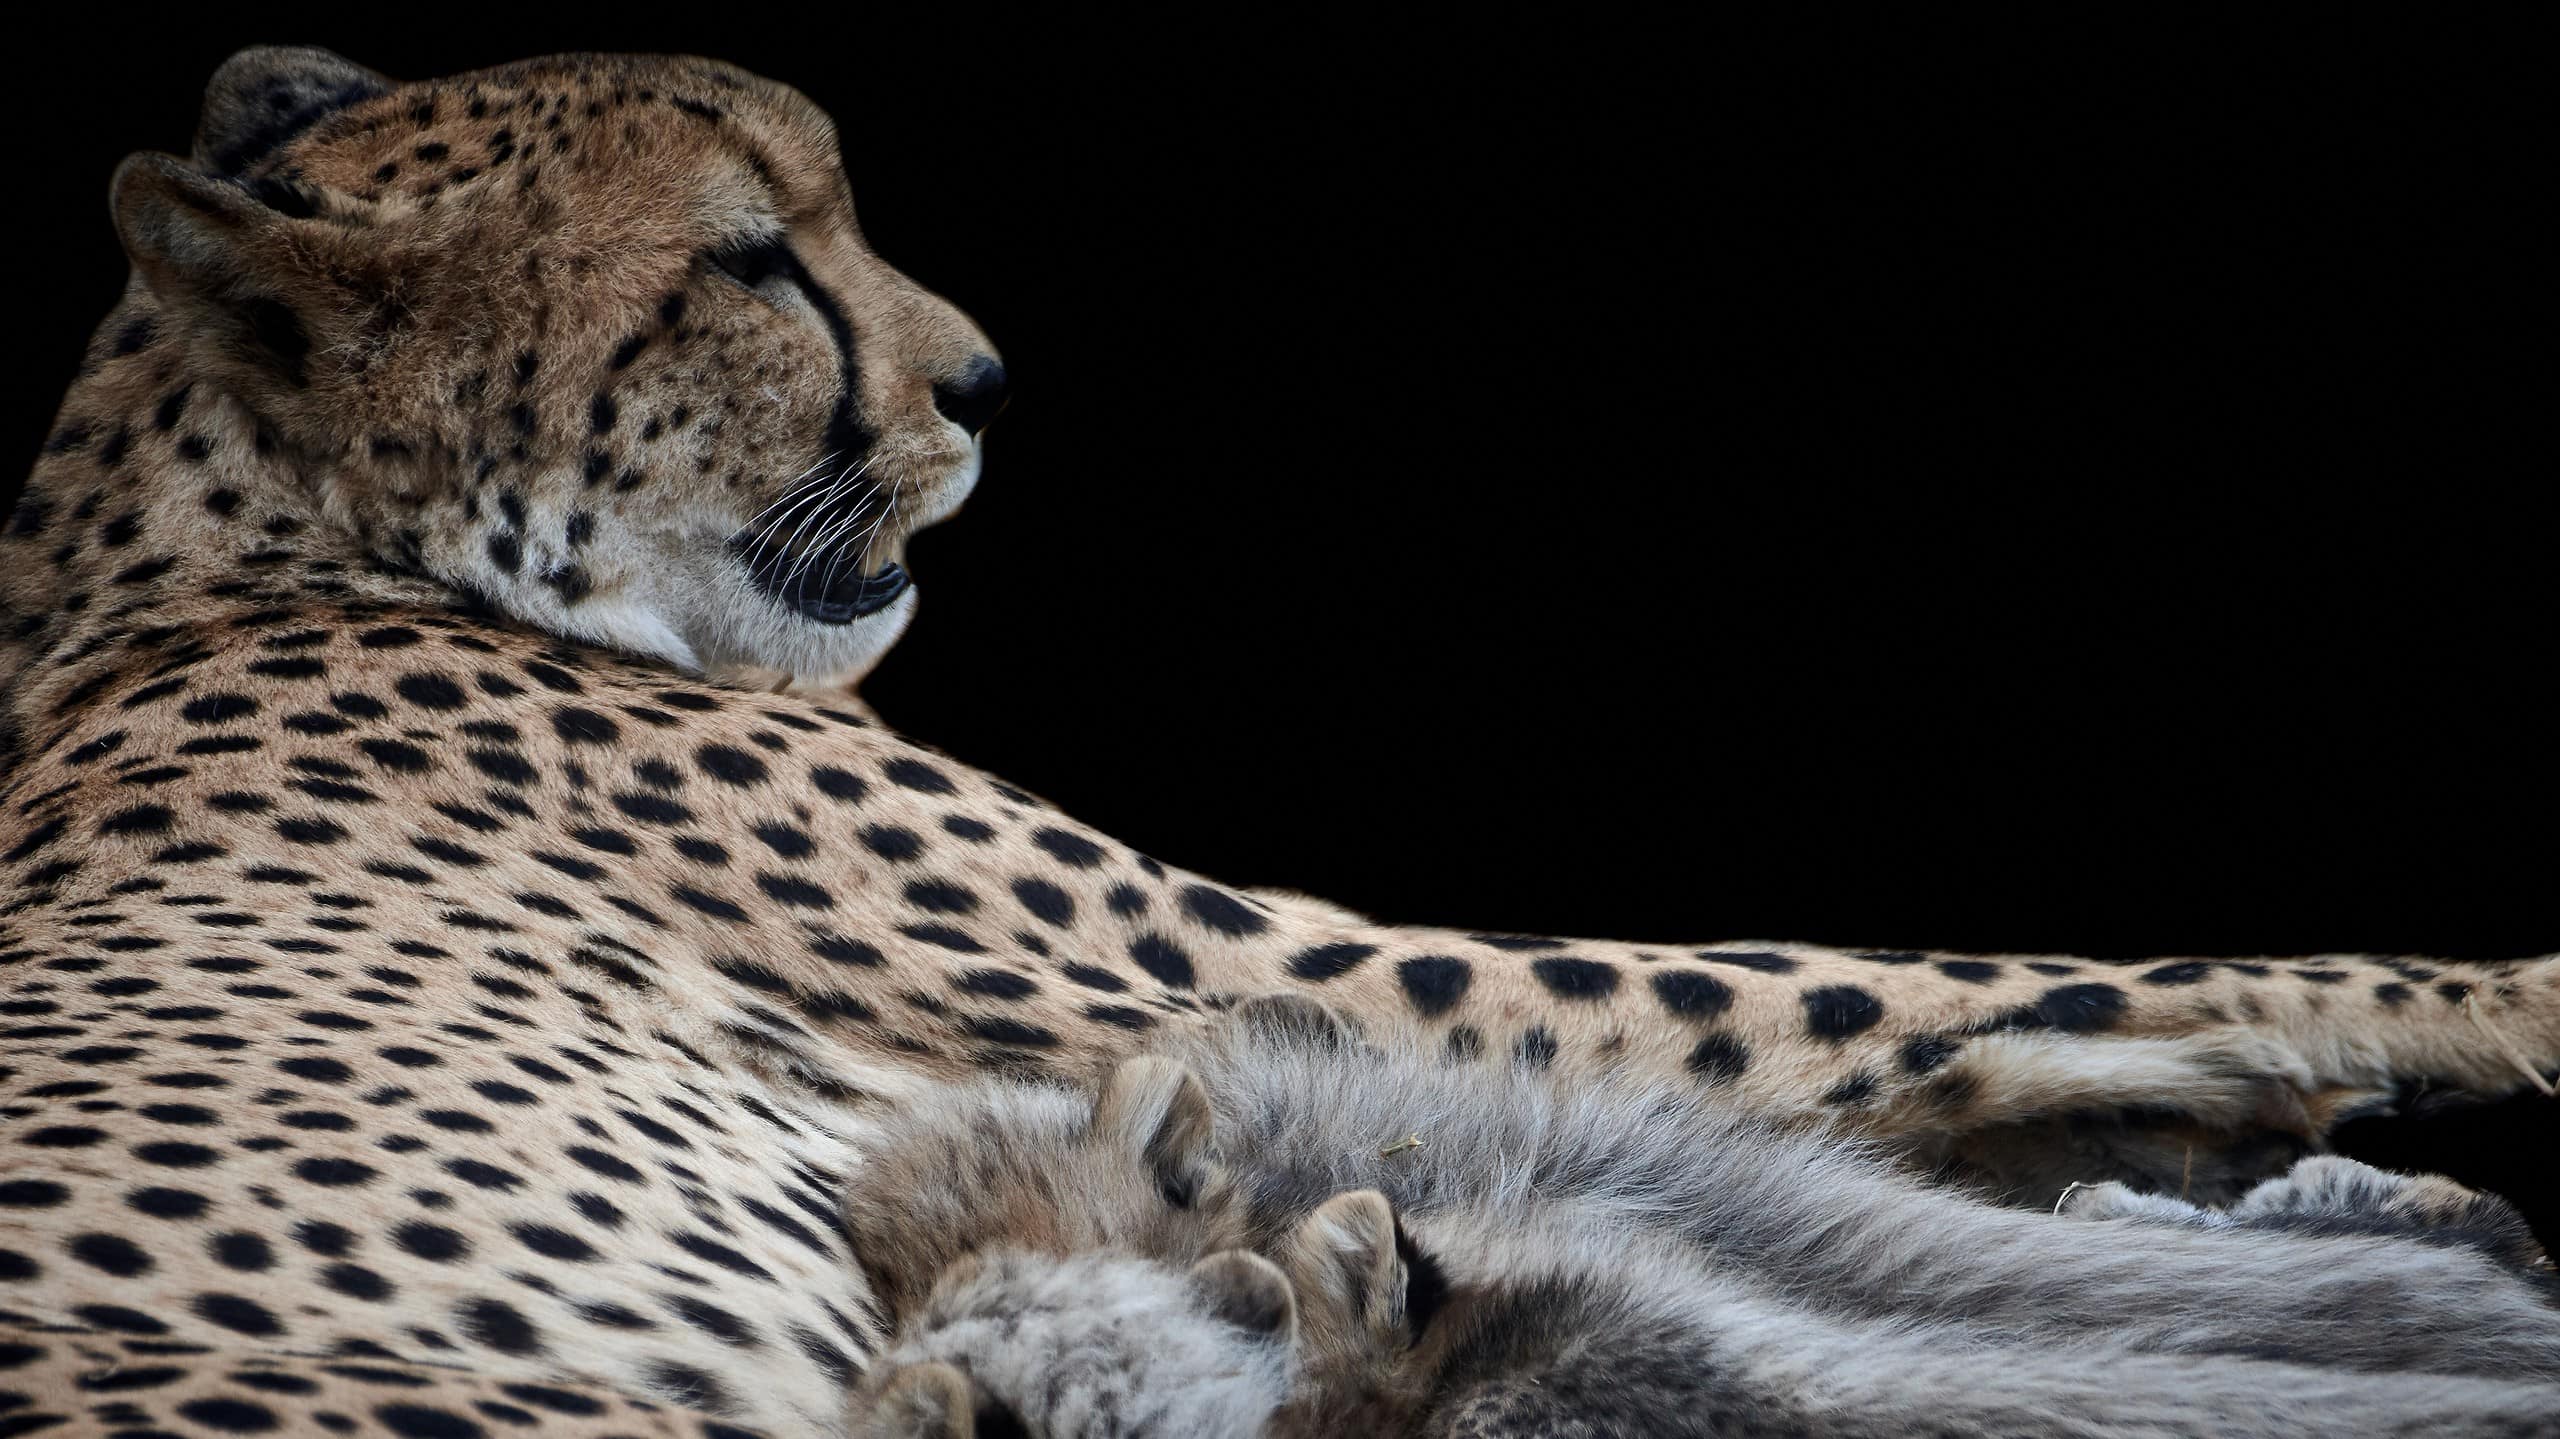 Close-up of a cheetah nursing newborn cubs (Acinonyx jubatus). Baby animals suckling isolated on black background.